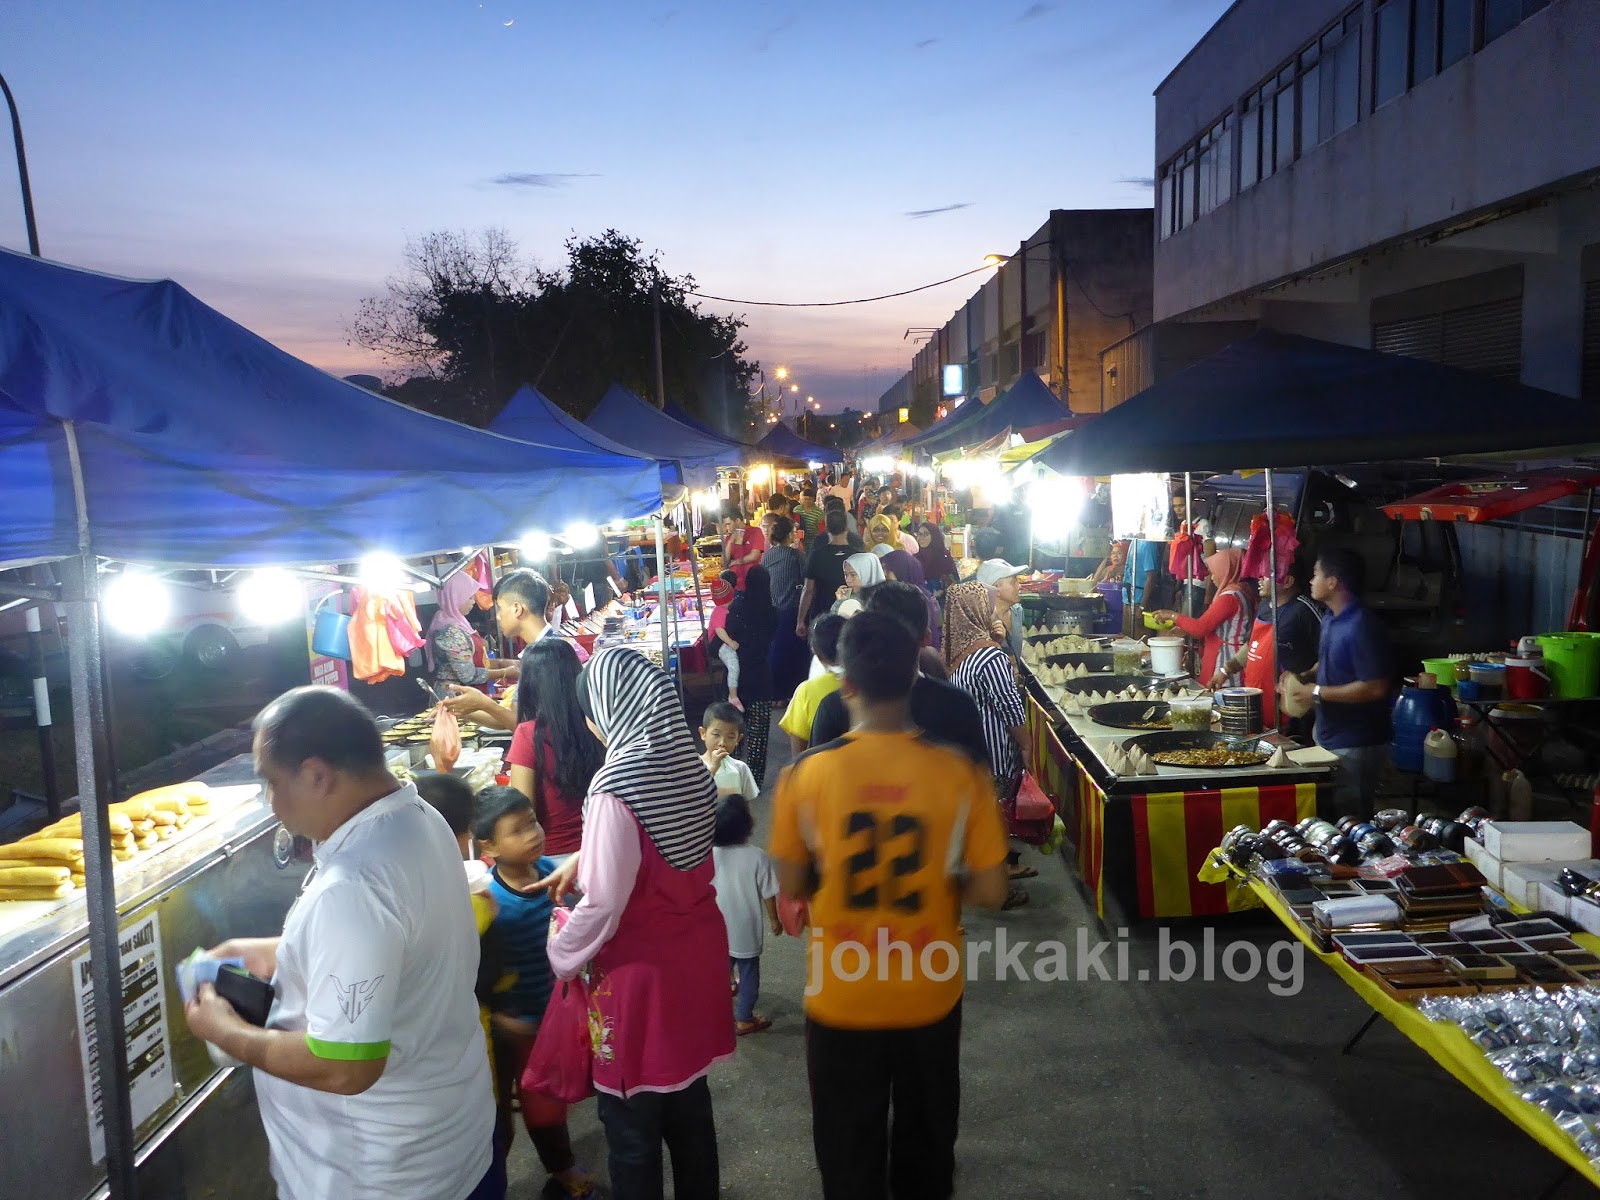  Pasar  Malam  Tangkak Johor    Johor Kaki Travels for Food